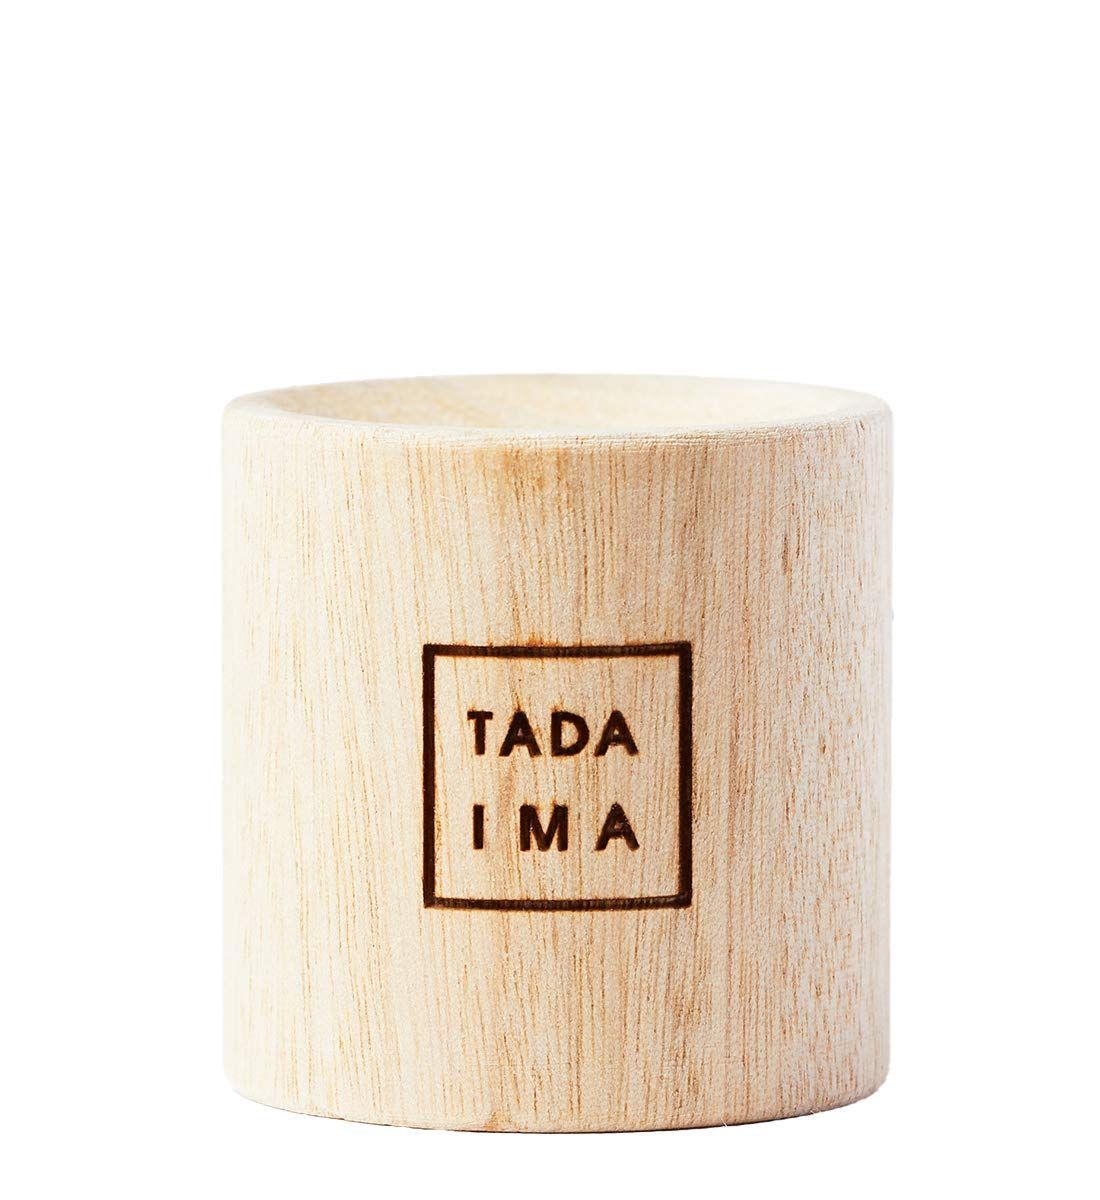 TADAIMA wood aroma dish アロマディフューザー ディフュー | agb.md